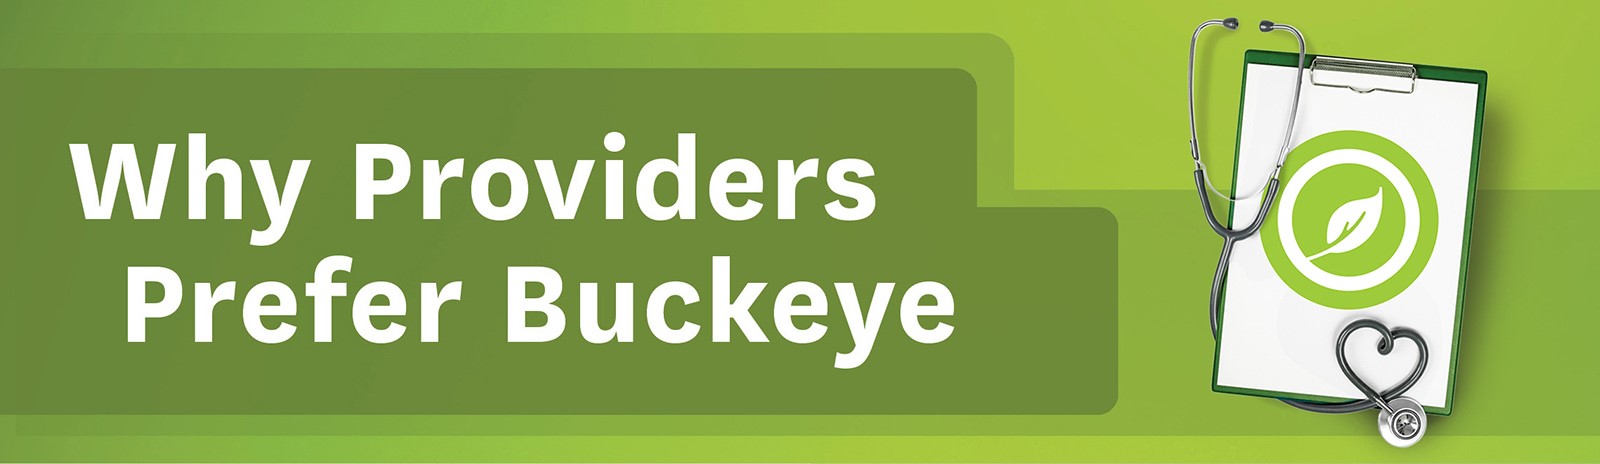 Why Providers Prefer Buckeye